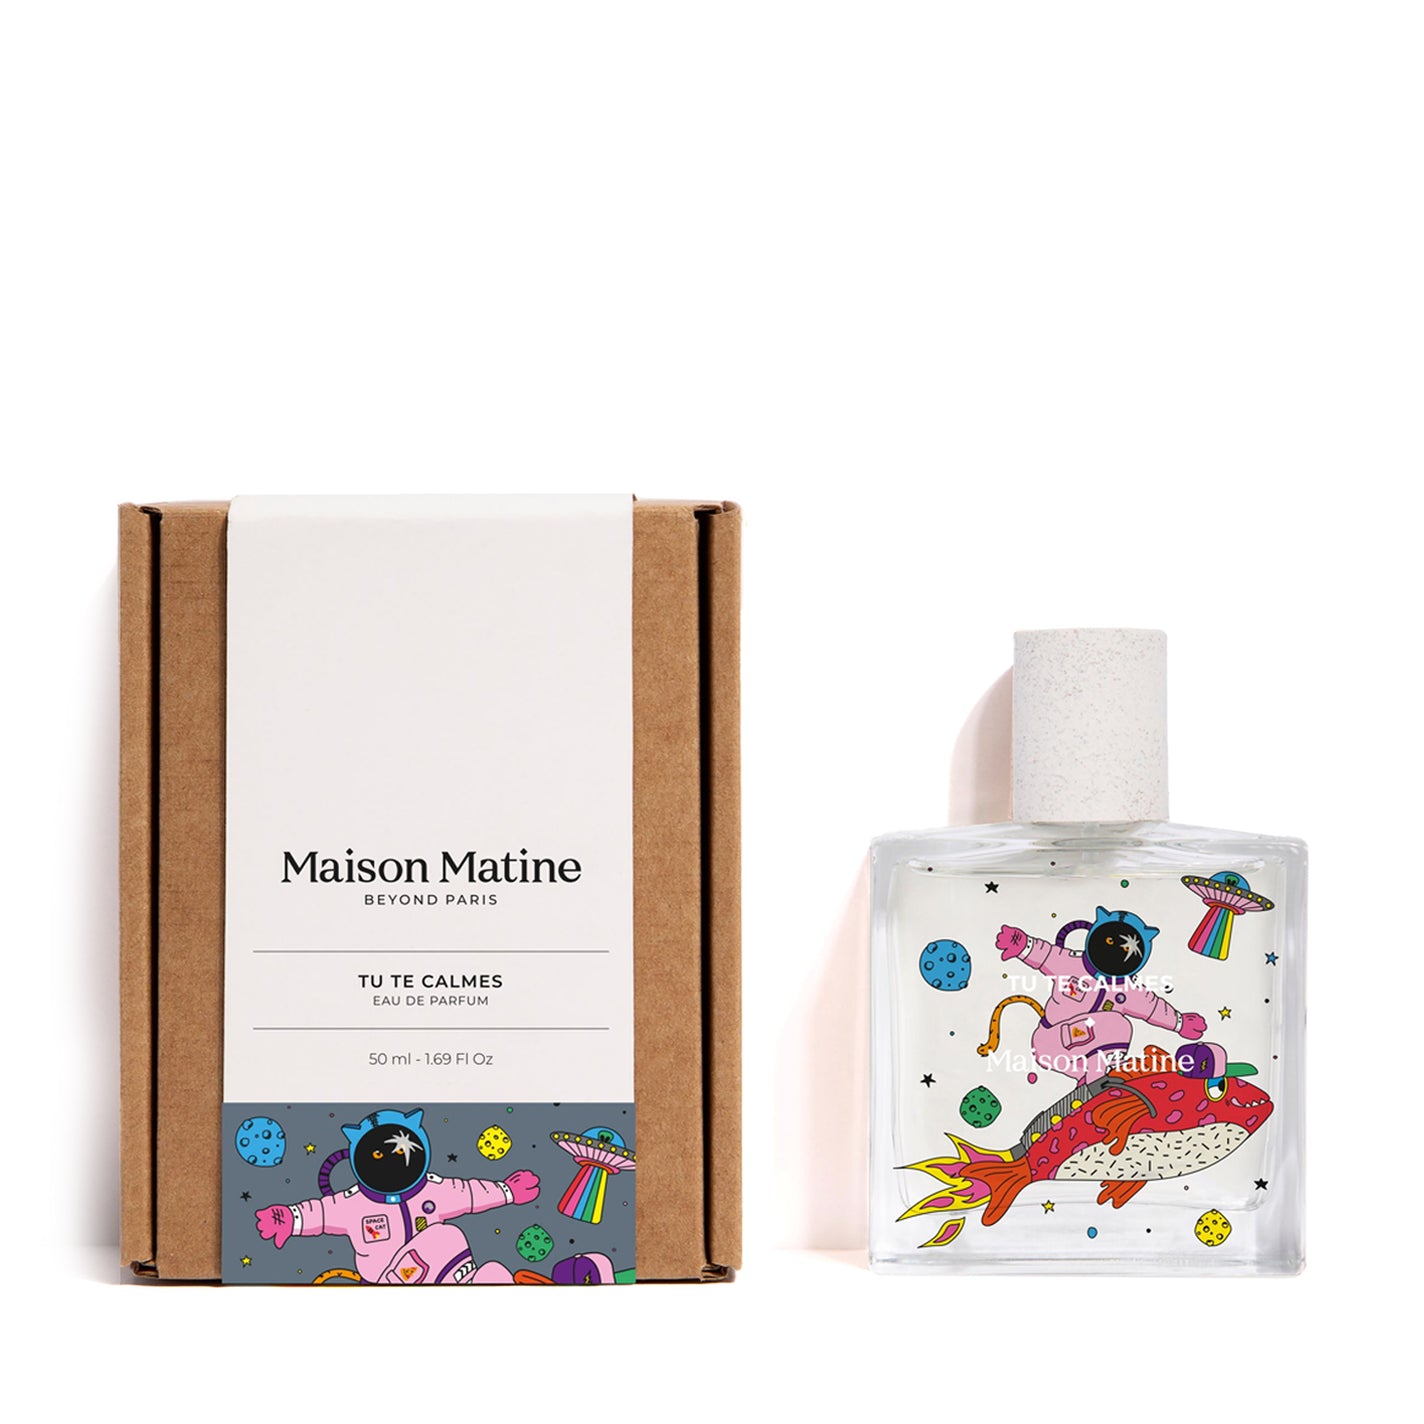 Maison Matine Tu Te Calmes Eau de Parfum - 50ml